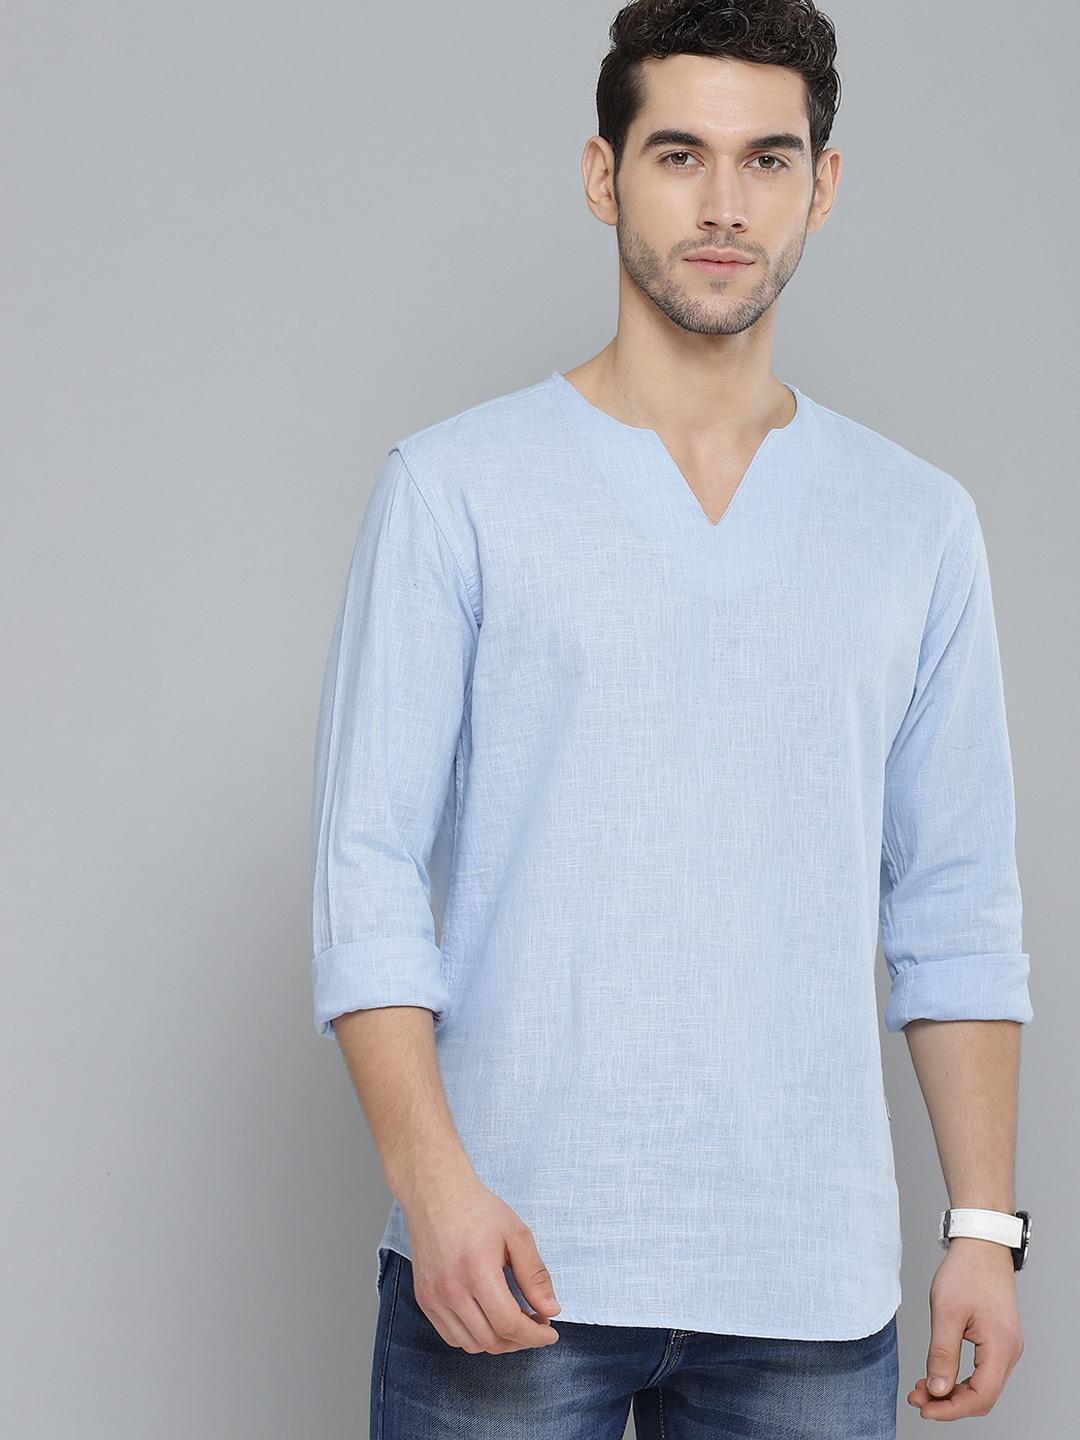 dennison-men-blue-comfort-fit-solid-shirt-style-kurta